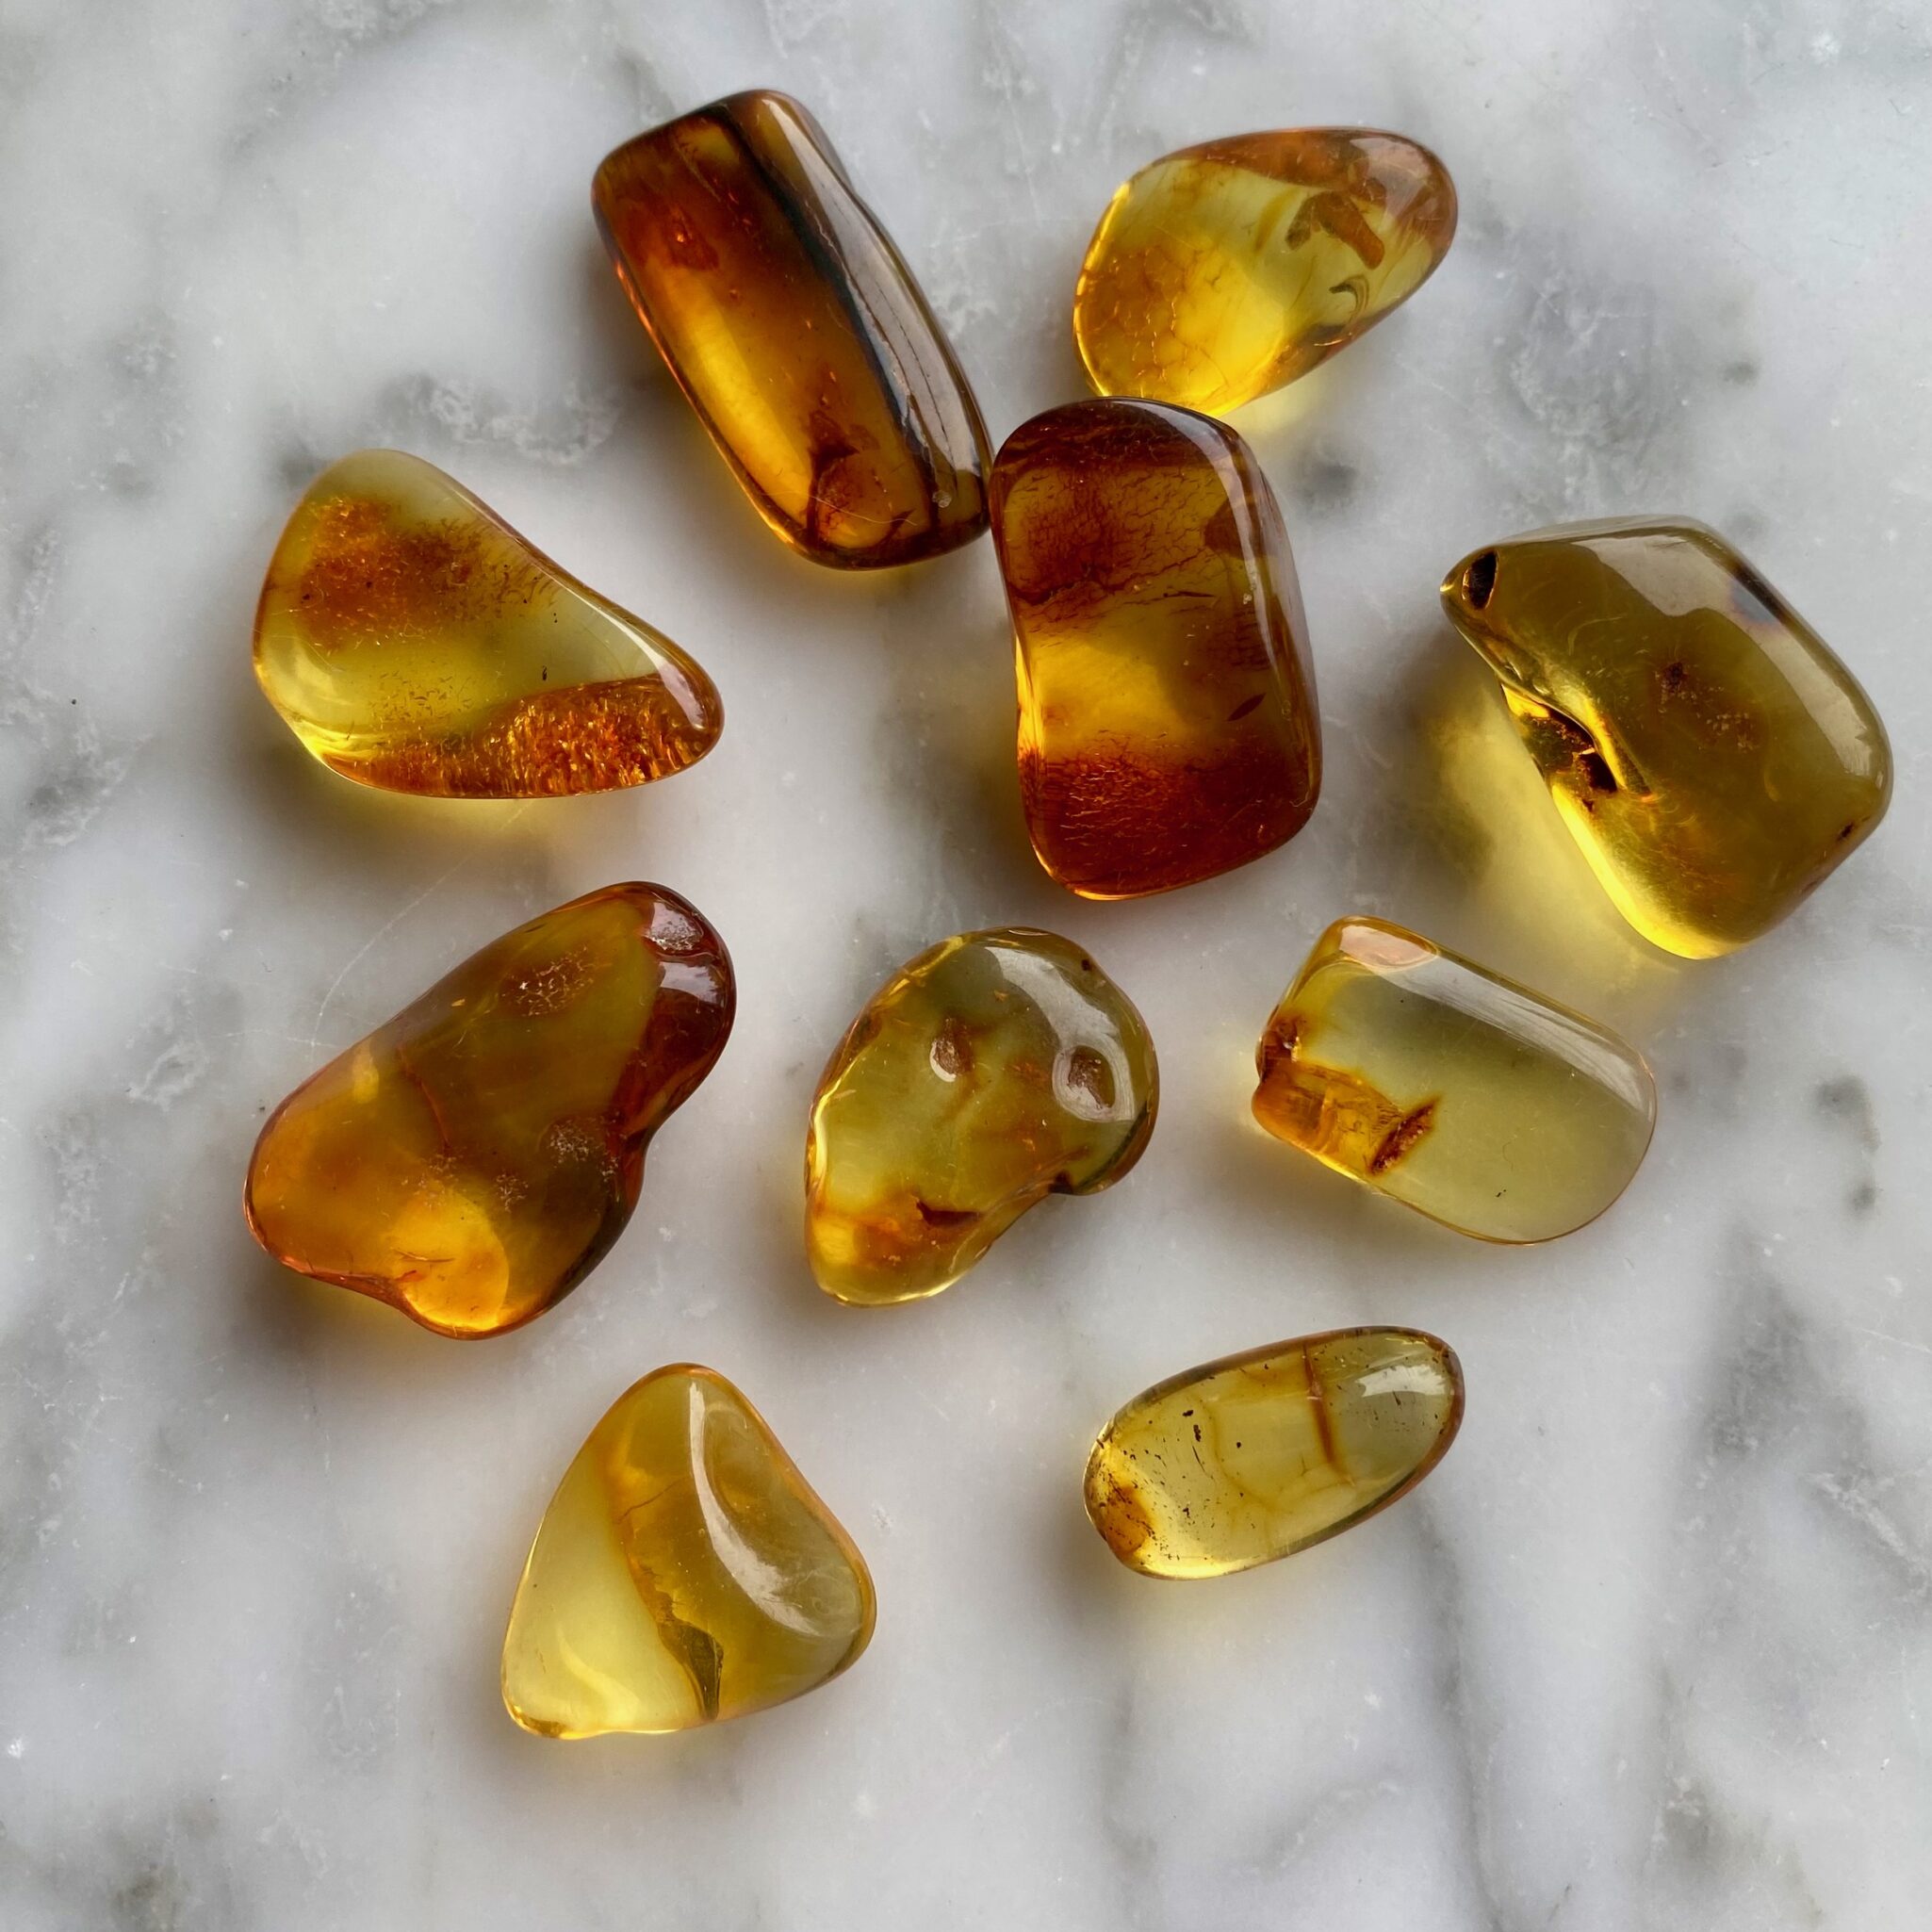 baltic amber tumbled pocket stone - Ambre Baltique roulée pierre de poche